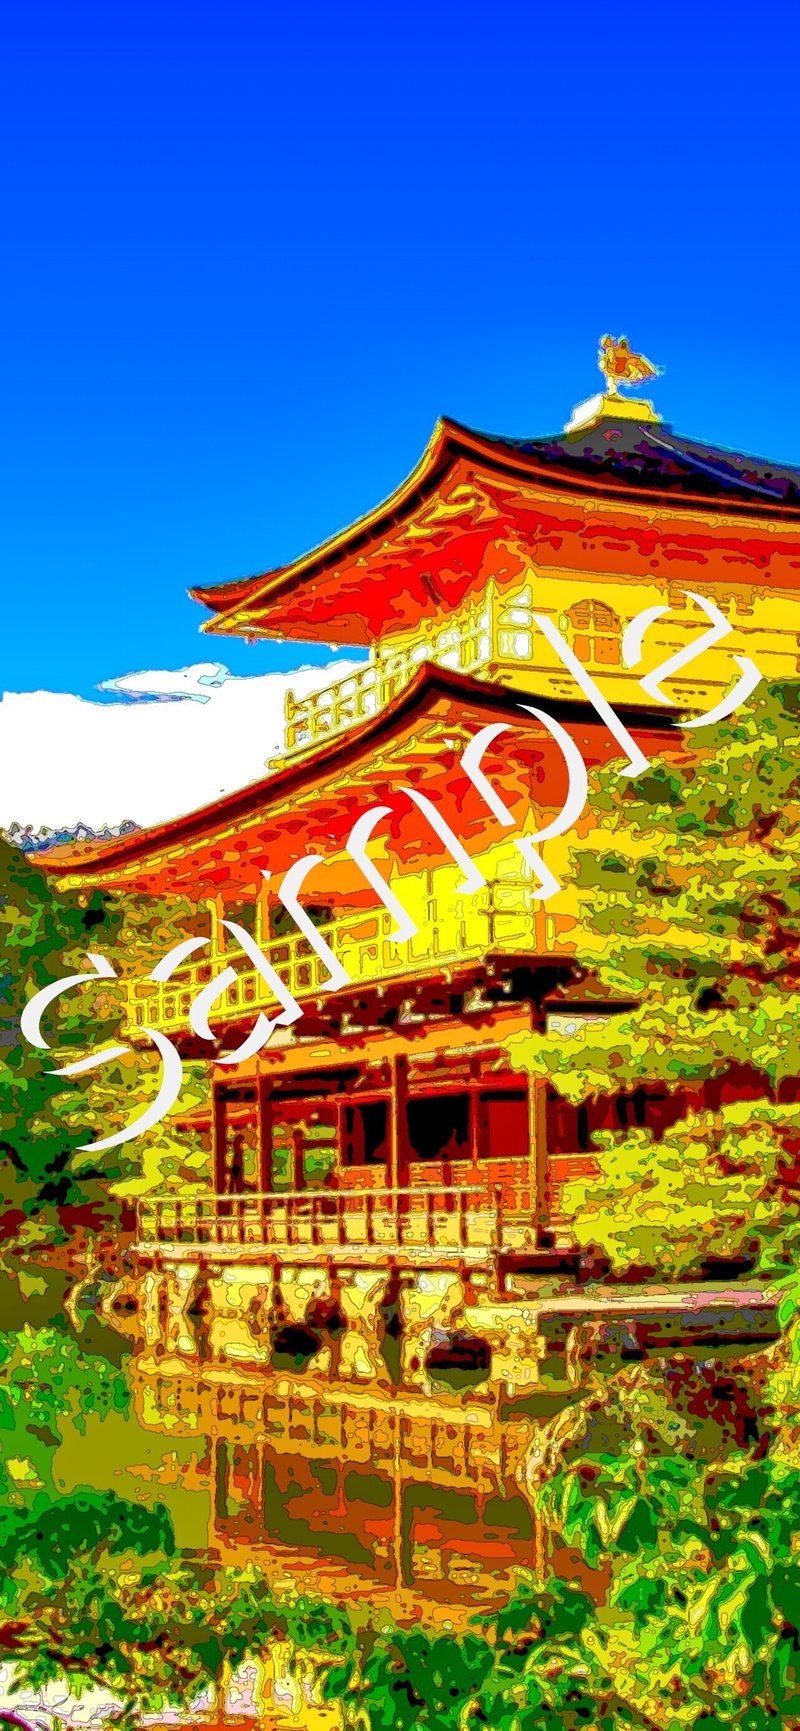 画像 京都 壁紙 Iphone 無料のhd壁紙画像